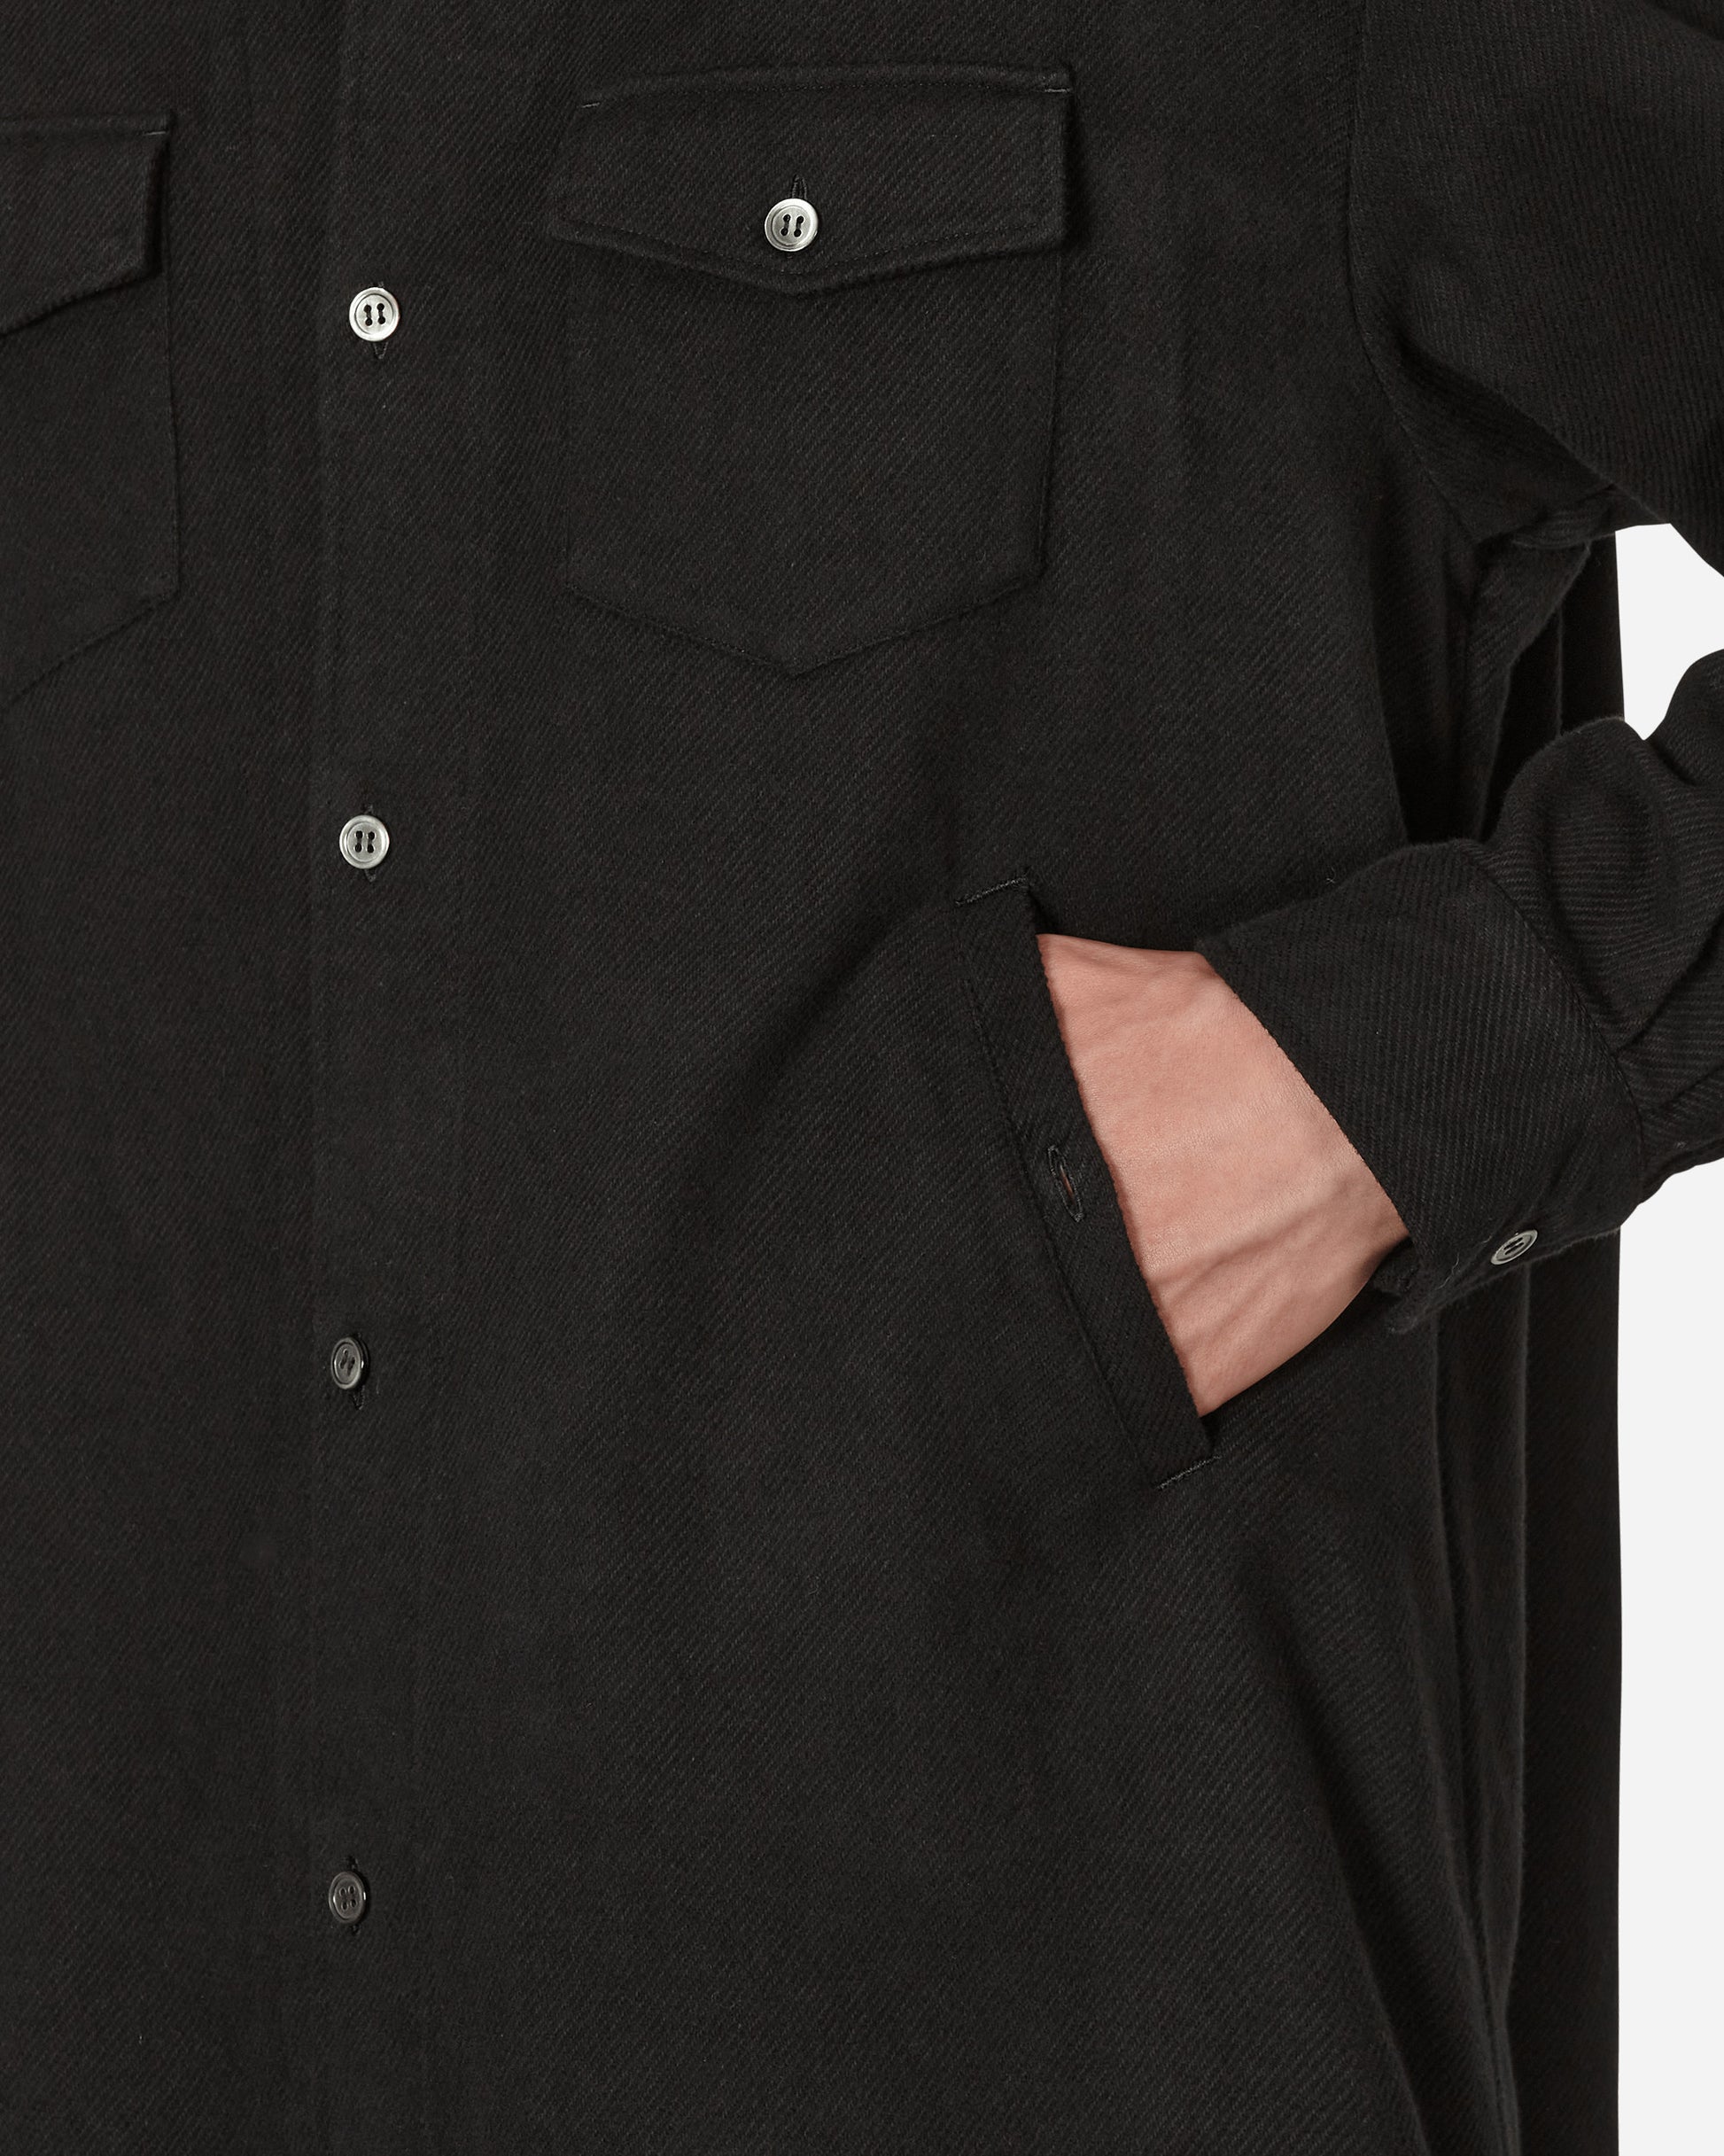 Undercover Raw Cut Overshirt Black Shirts Longsleeve UC2B4406-2  001